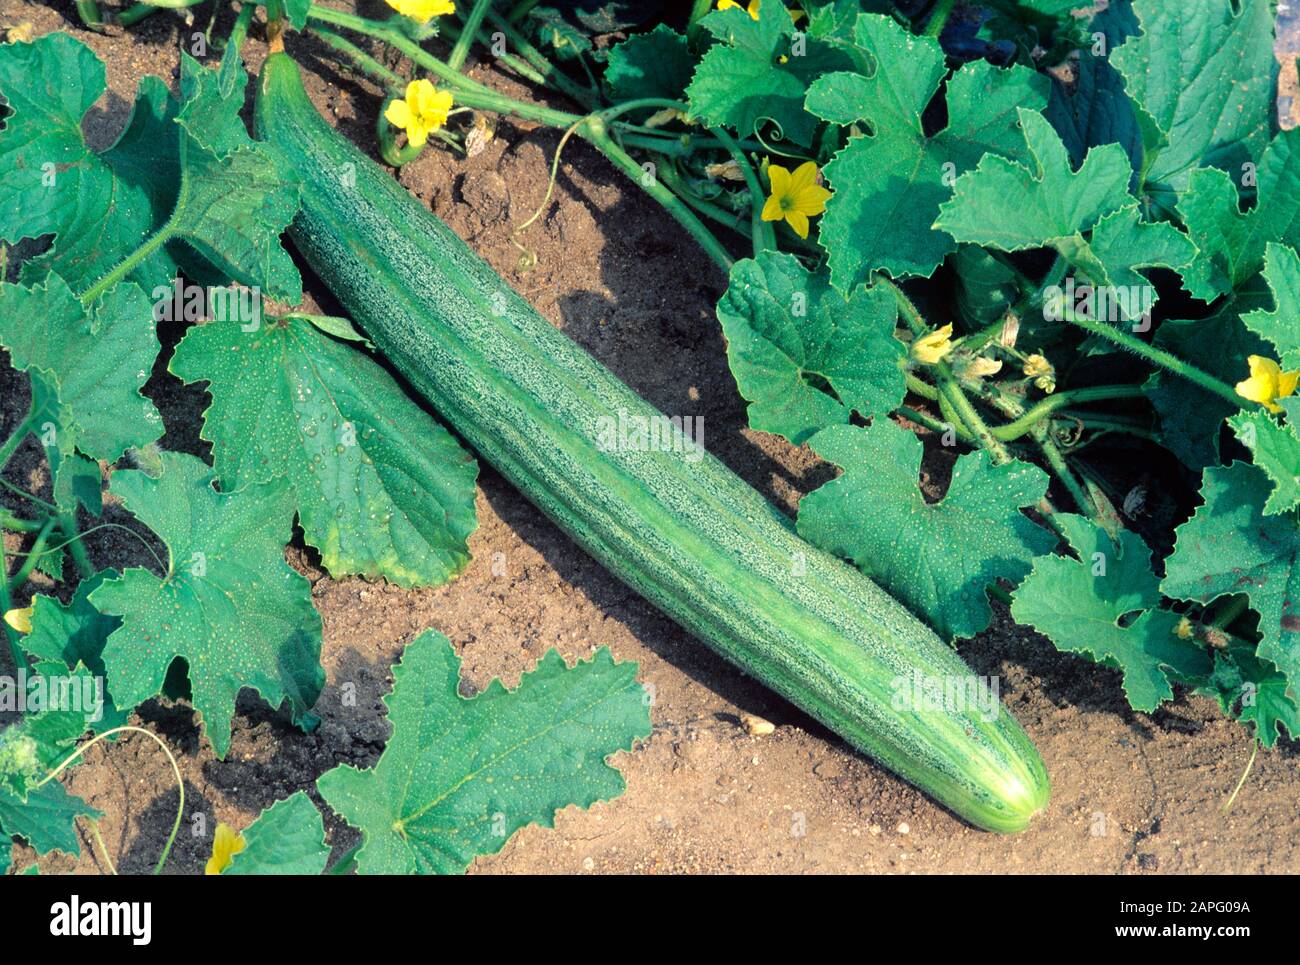 Long cucumber (Cucumis sativus) 'Fegouz vert', Vegetable Stock Photo